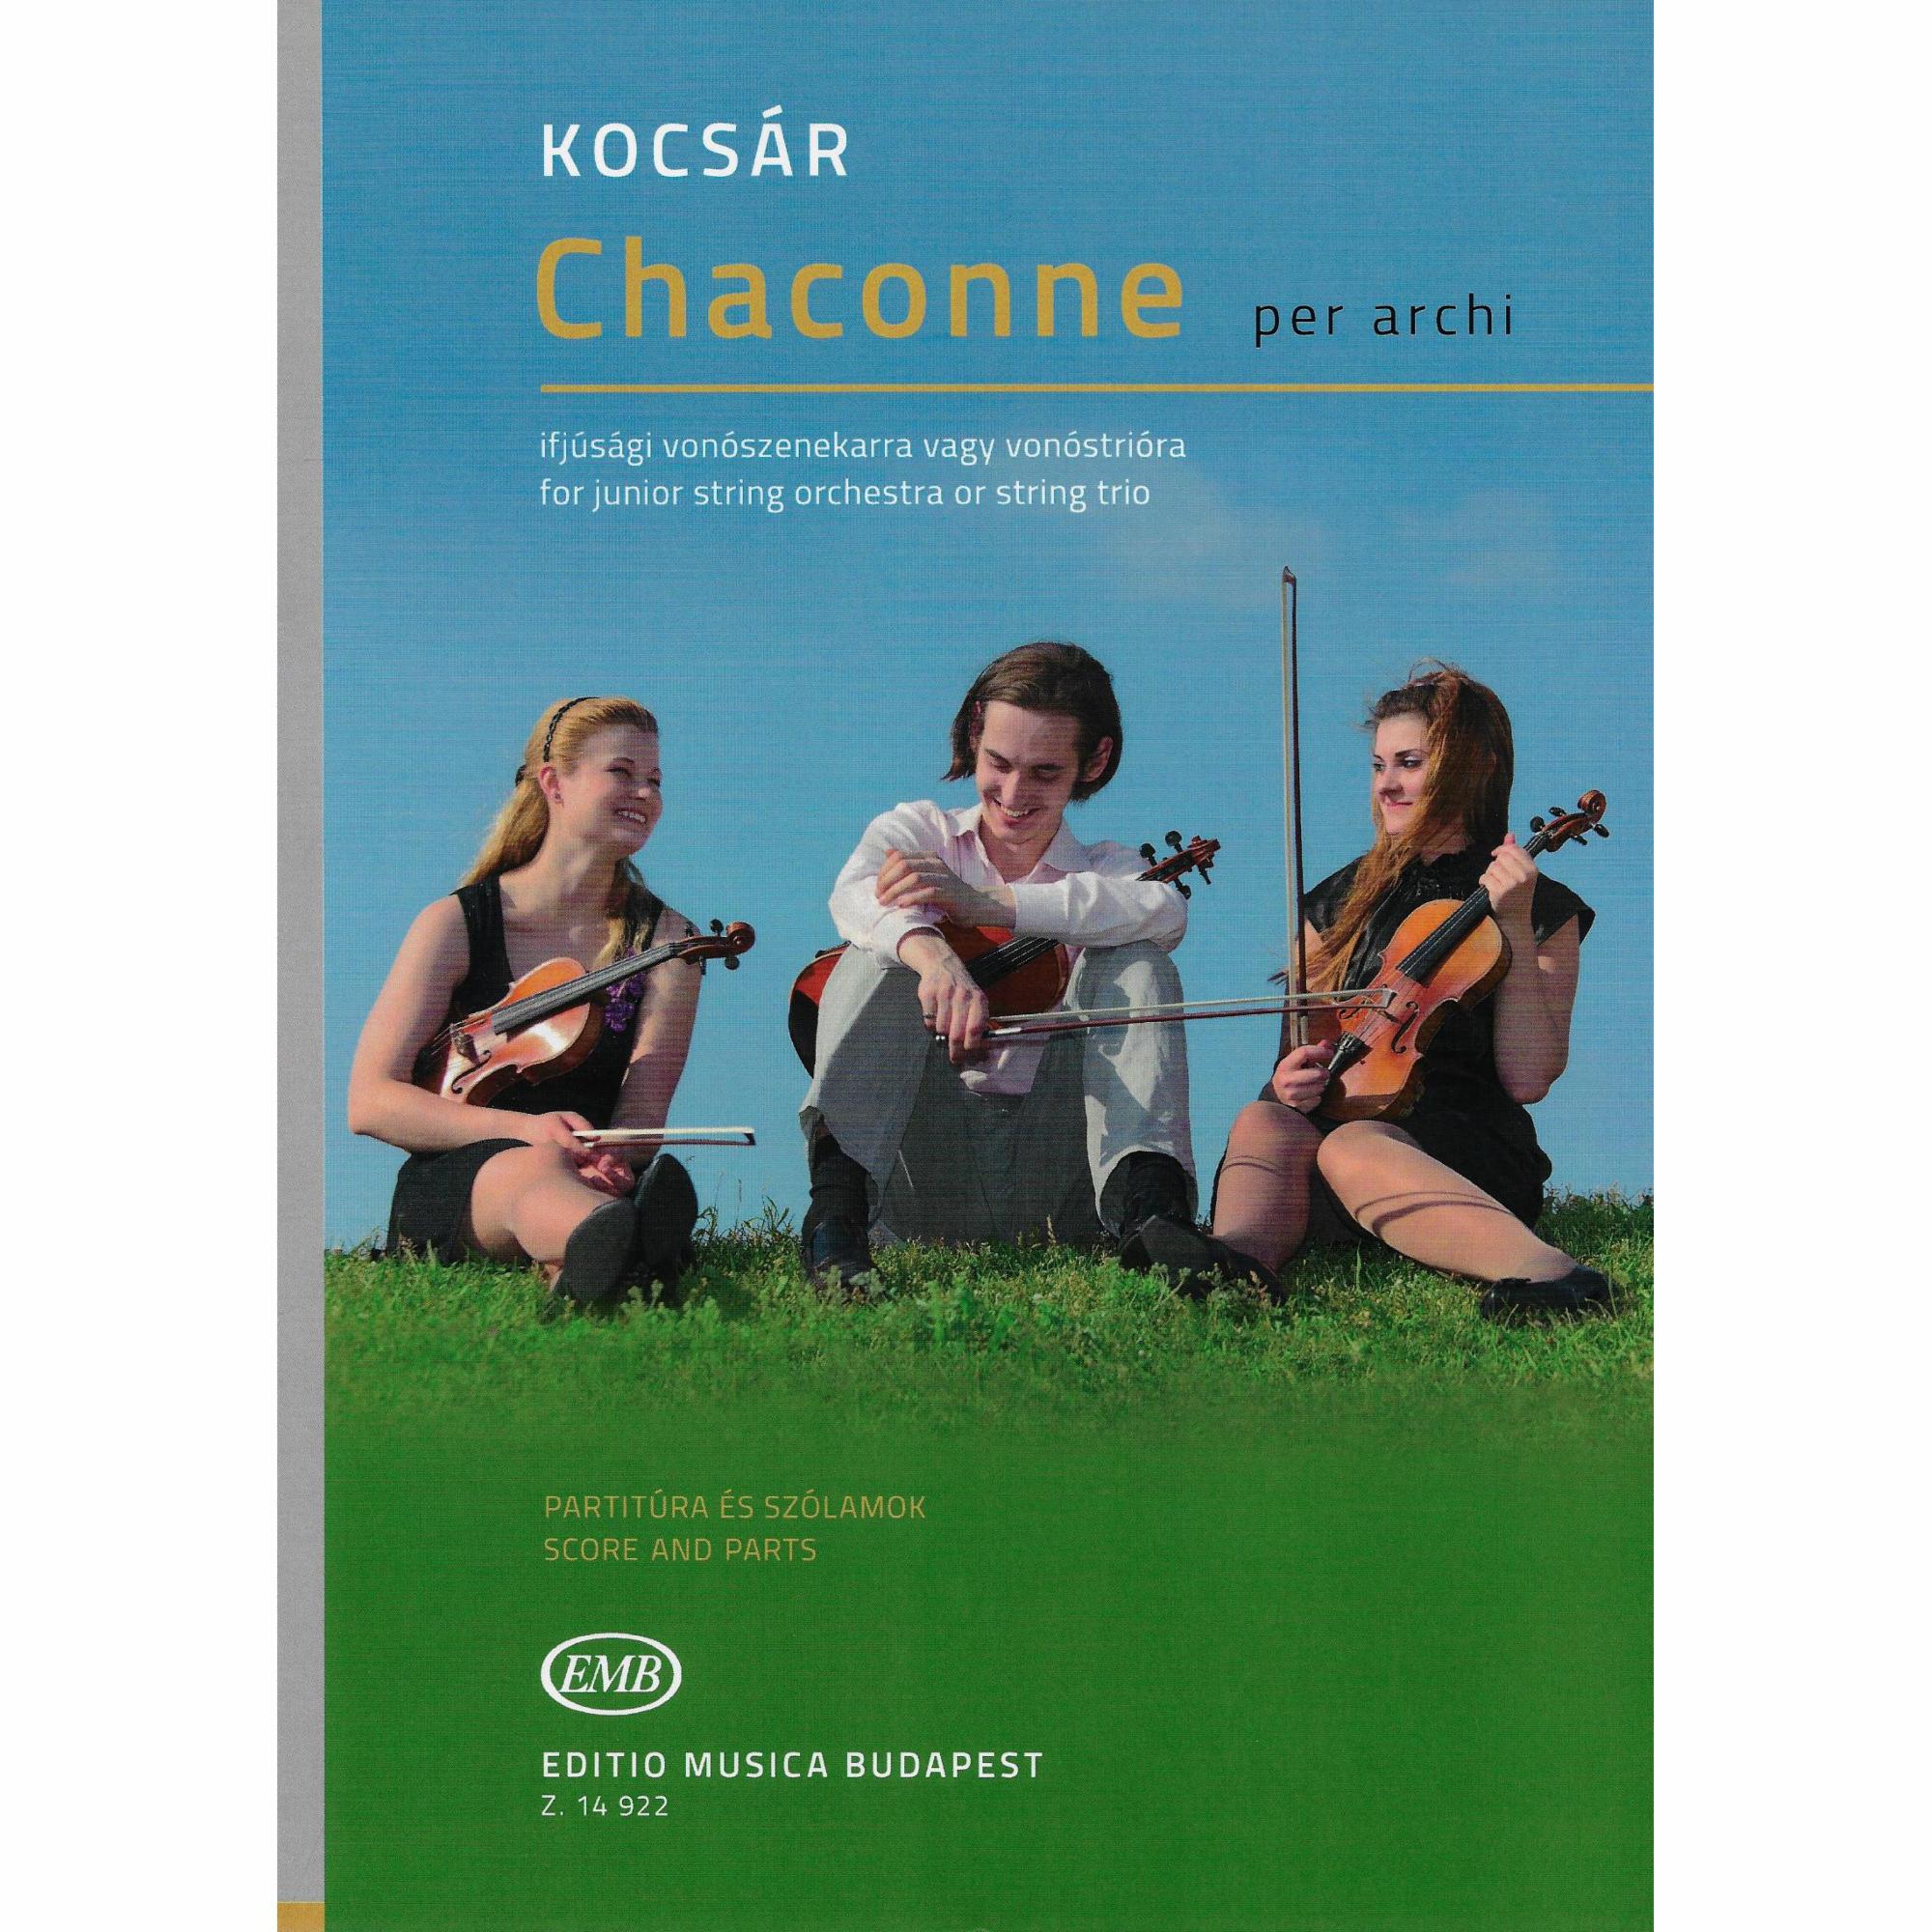 Kocsar -- Chaconne for String Trio